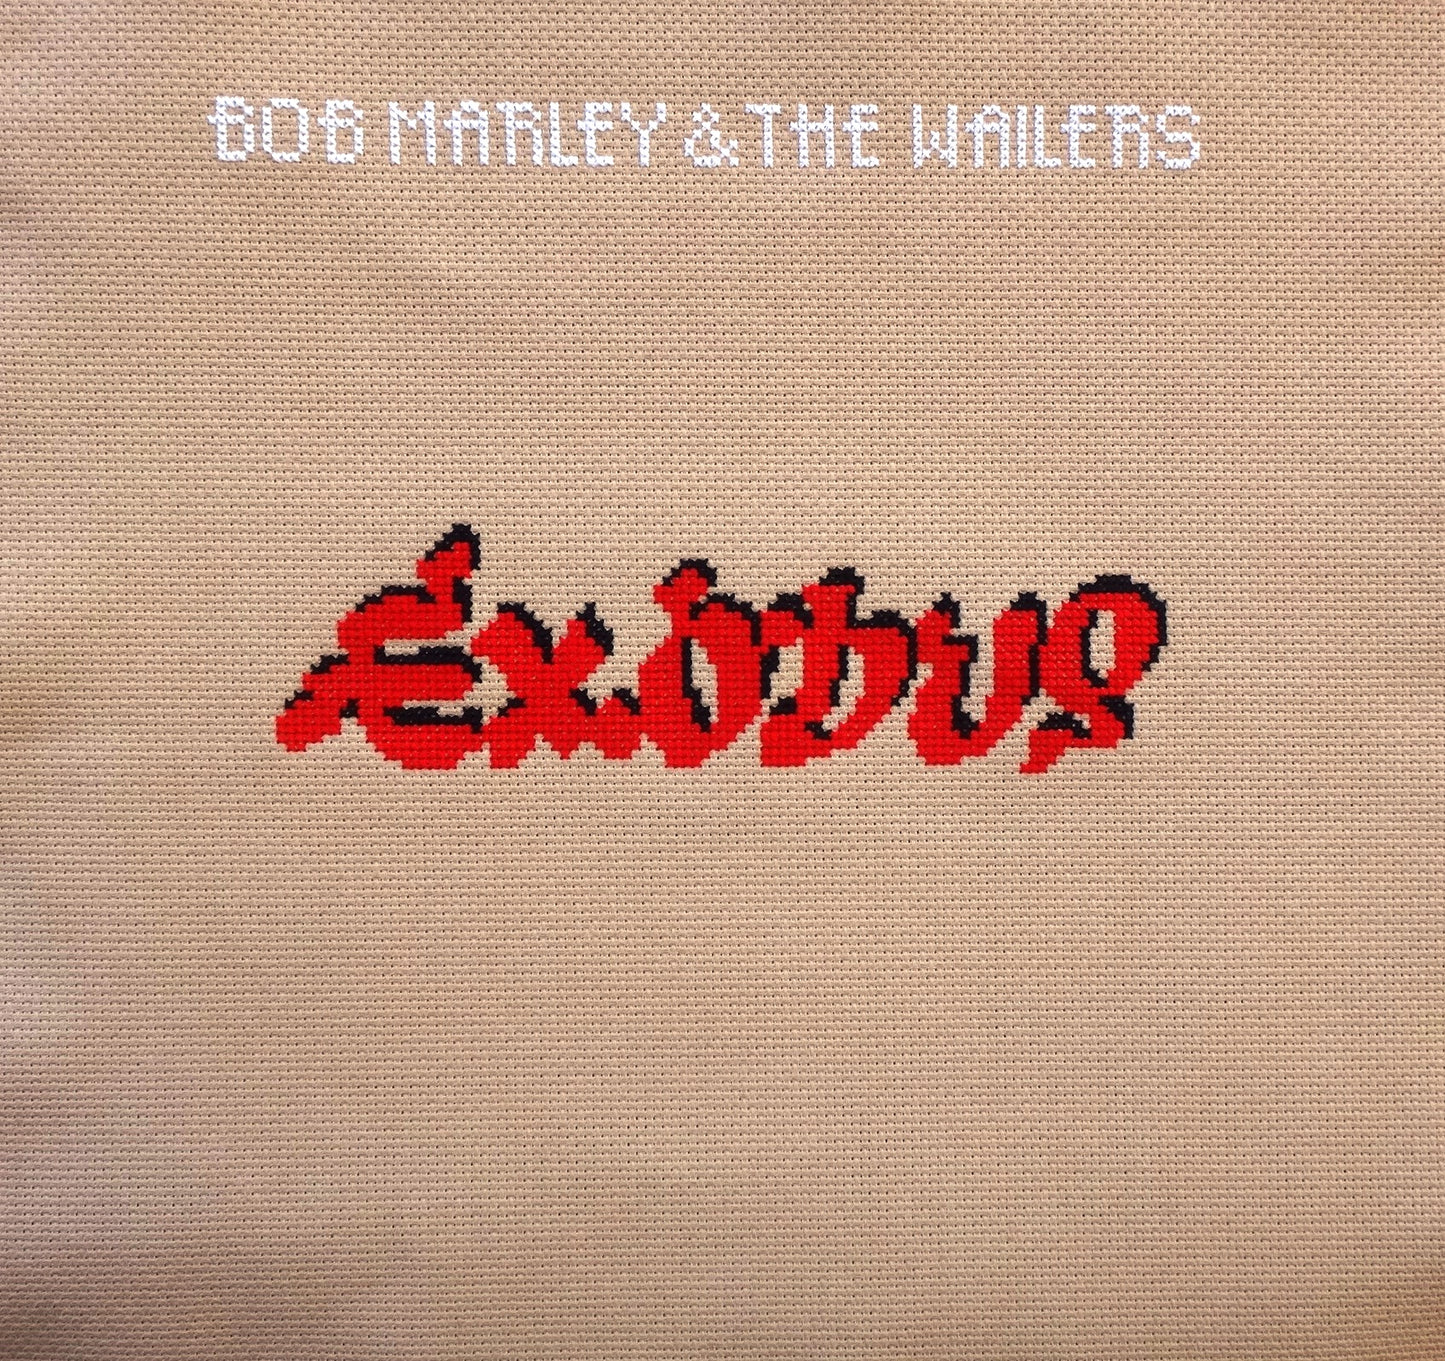 Bob Marley - Exodus album cover cross stitch pattern